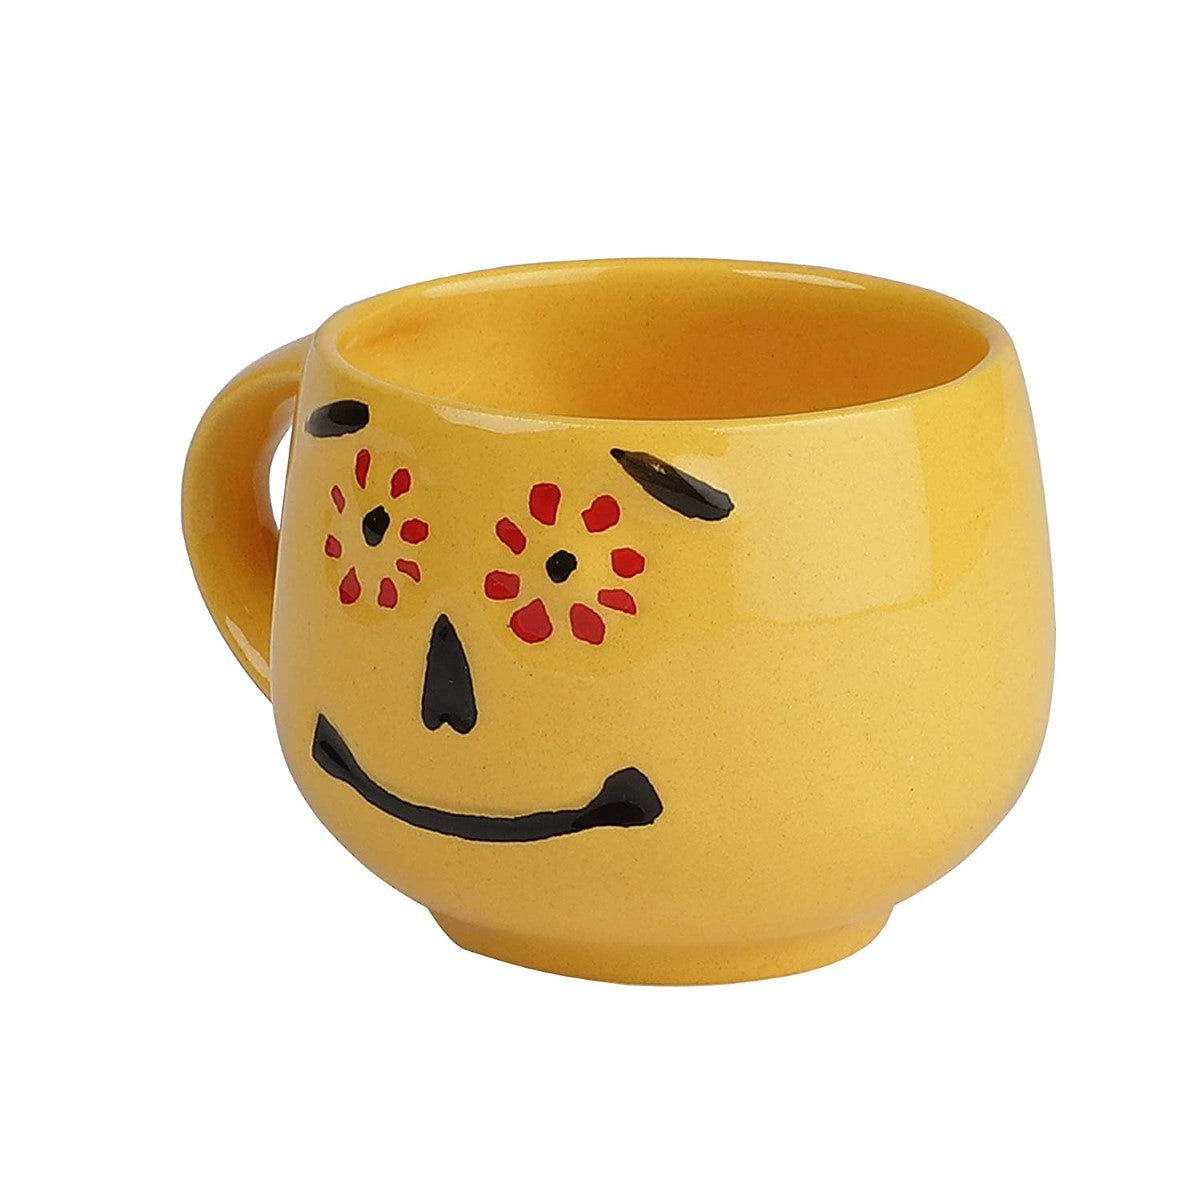 Smiley Yellow Ceramic Tea Cups (Set of 6)